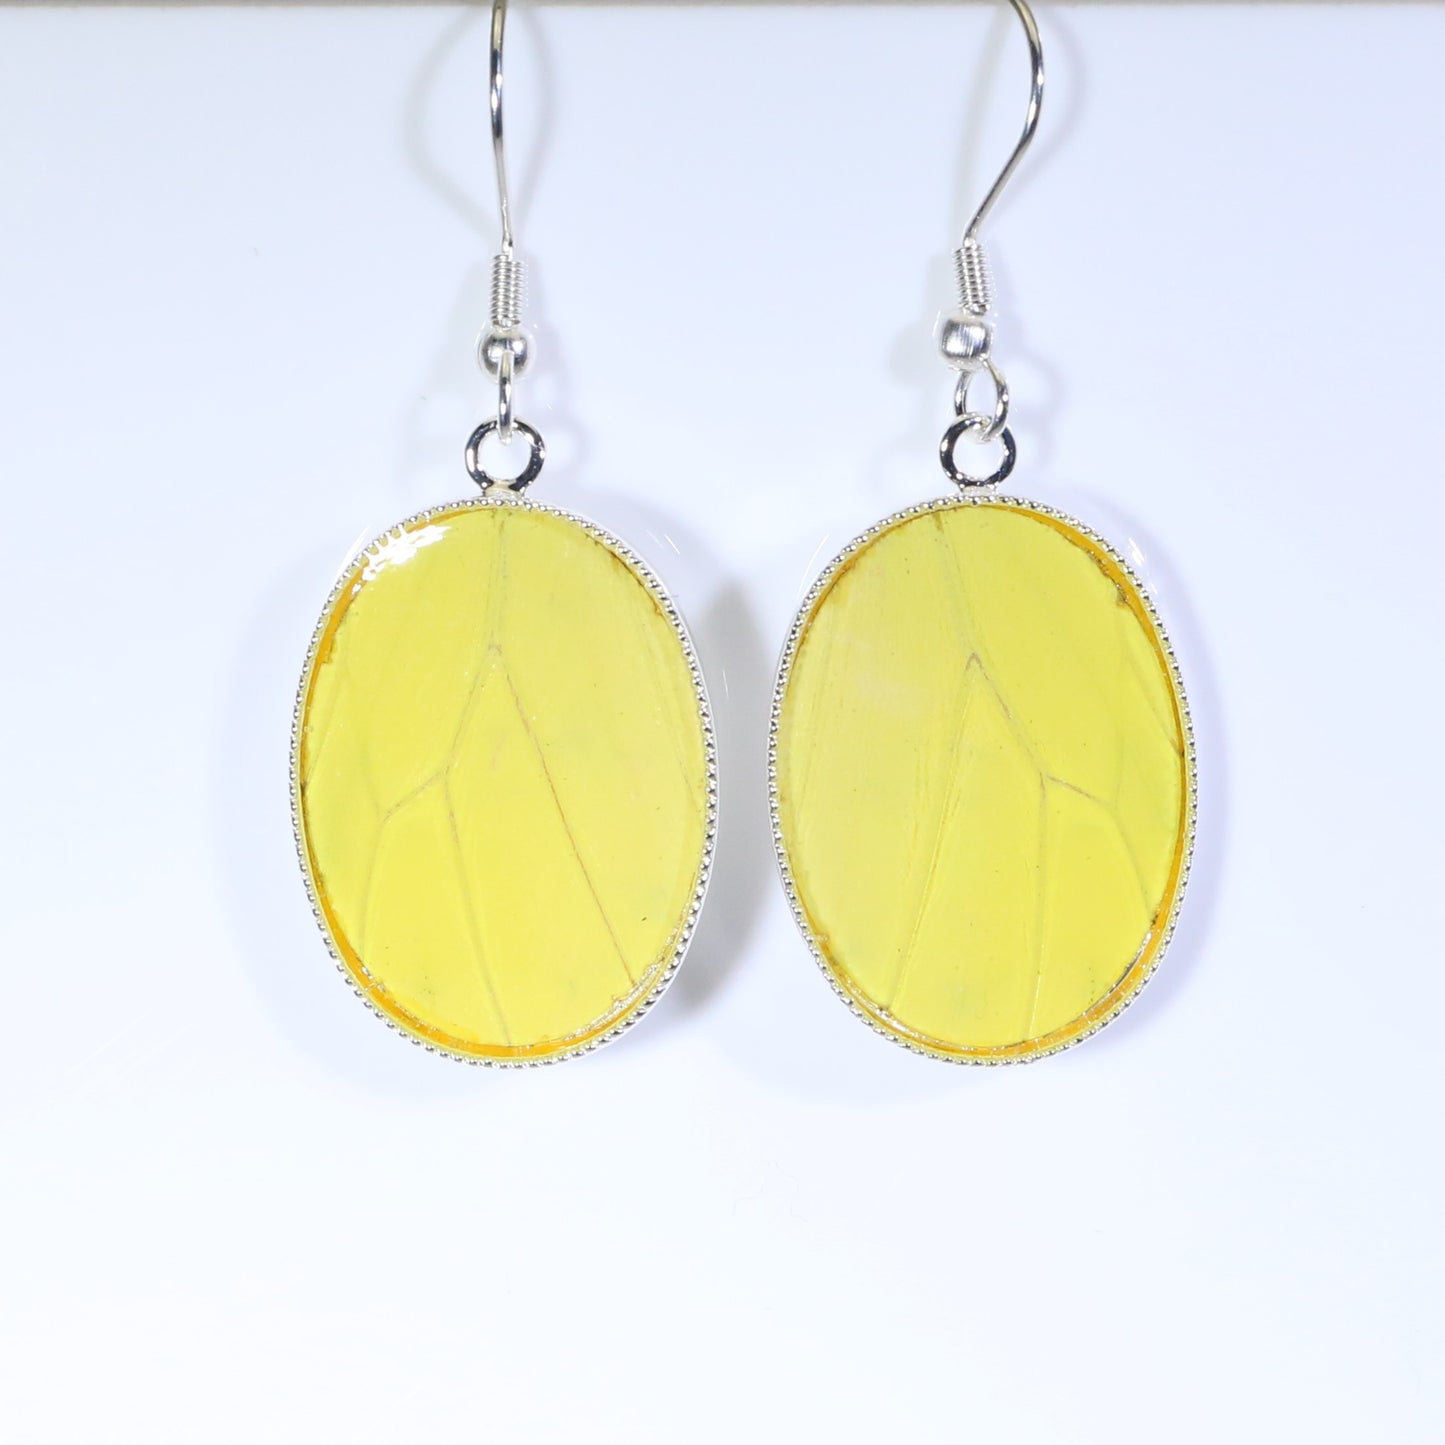 51206 - Real Butterfly Wing Jewelry - Earrings - Medium - Hebomia - Yellow